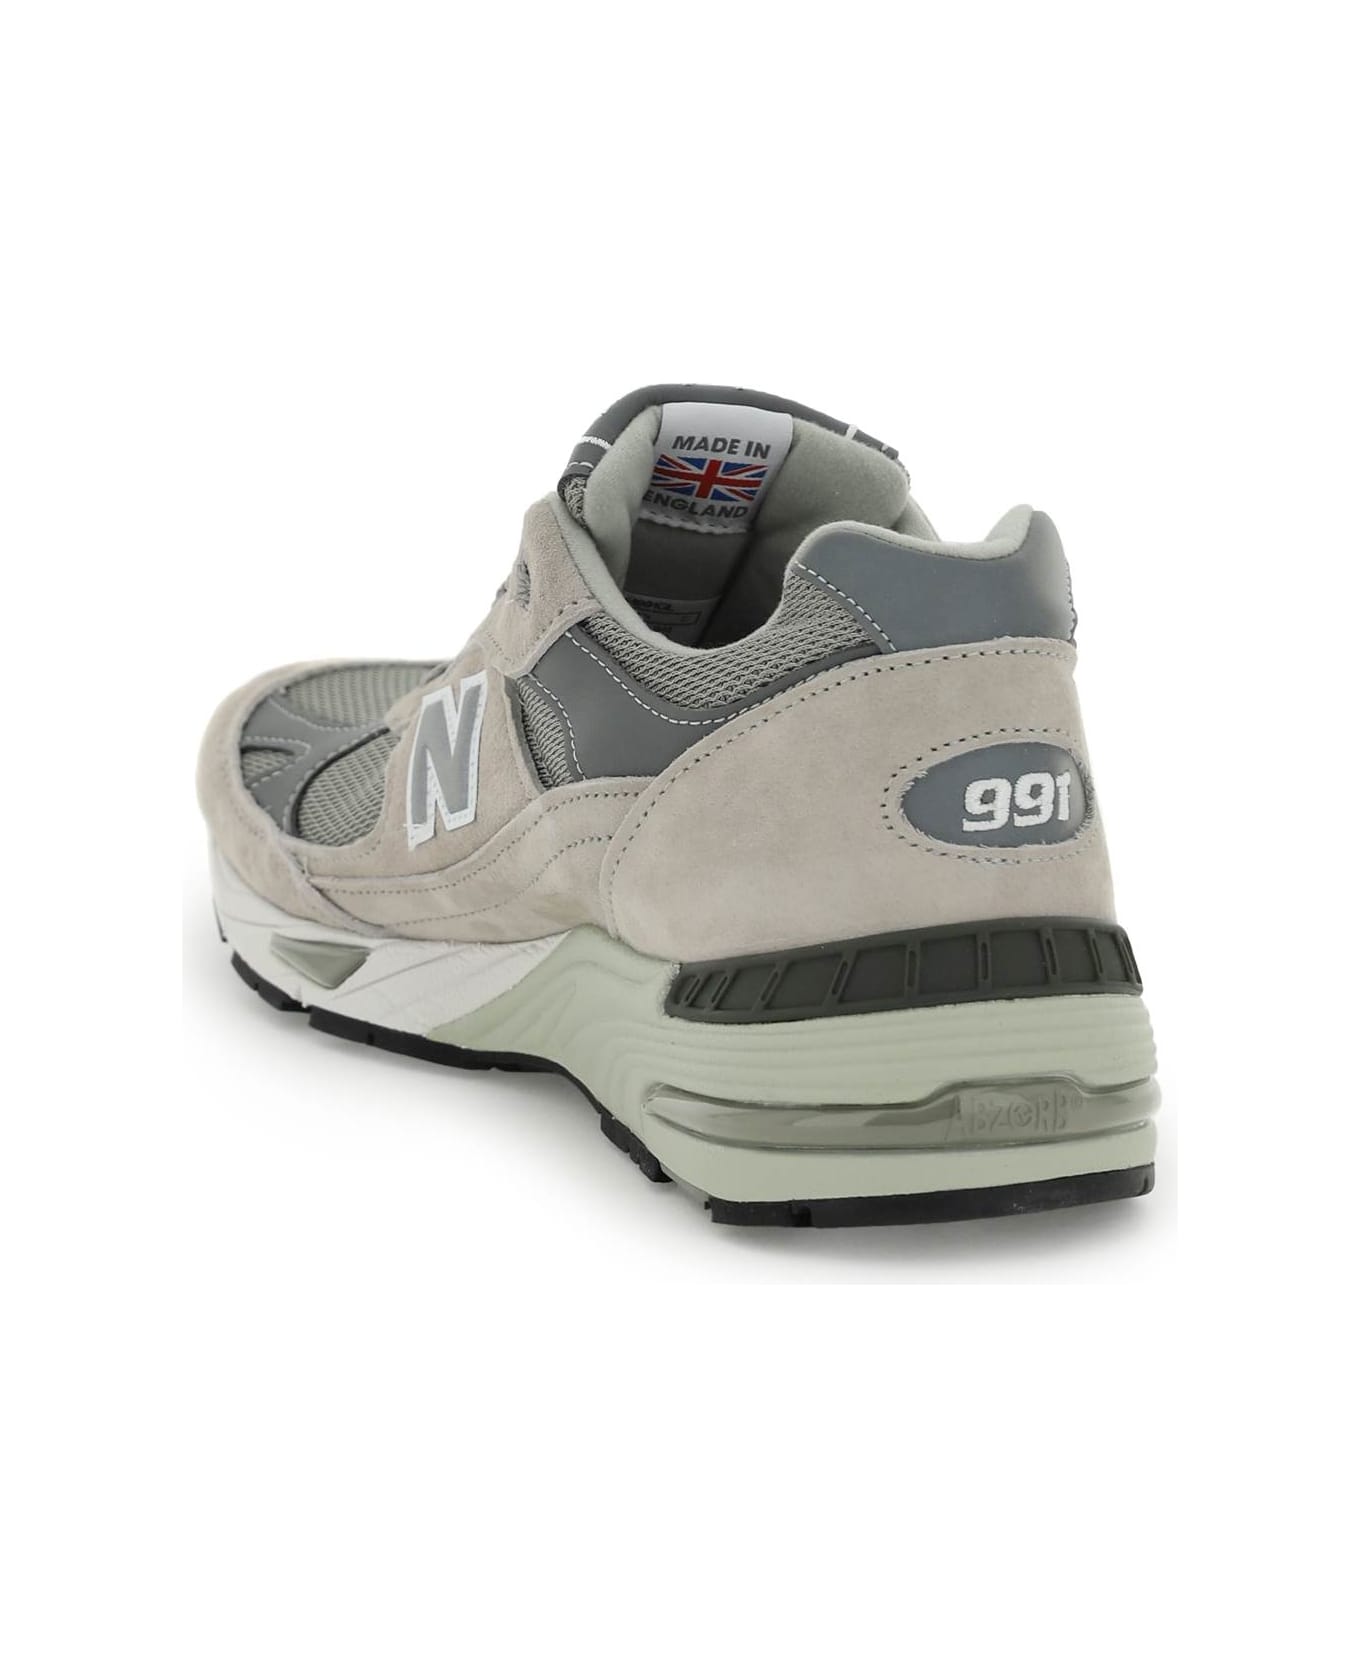 New Balance 991 Sneakers - GREY スニーカー